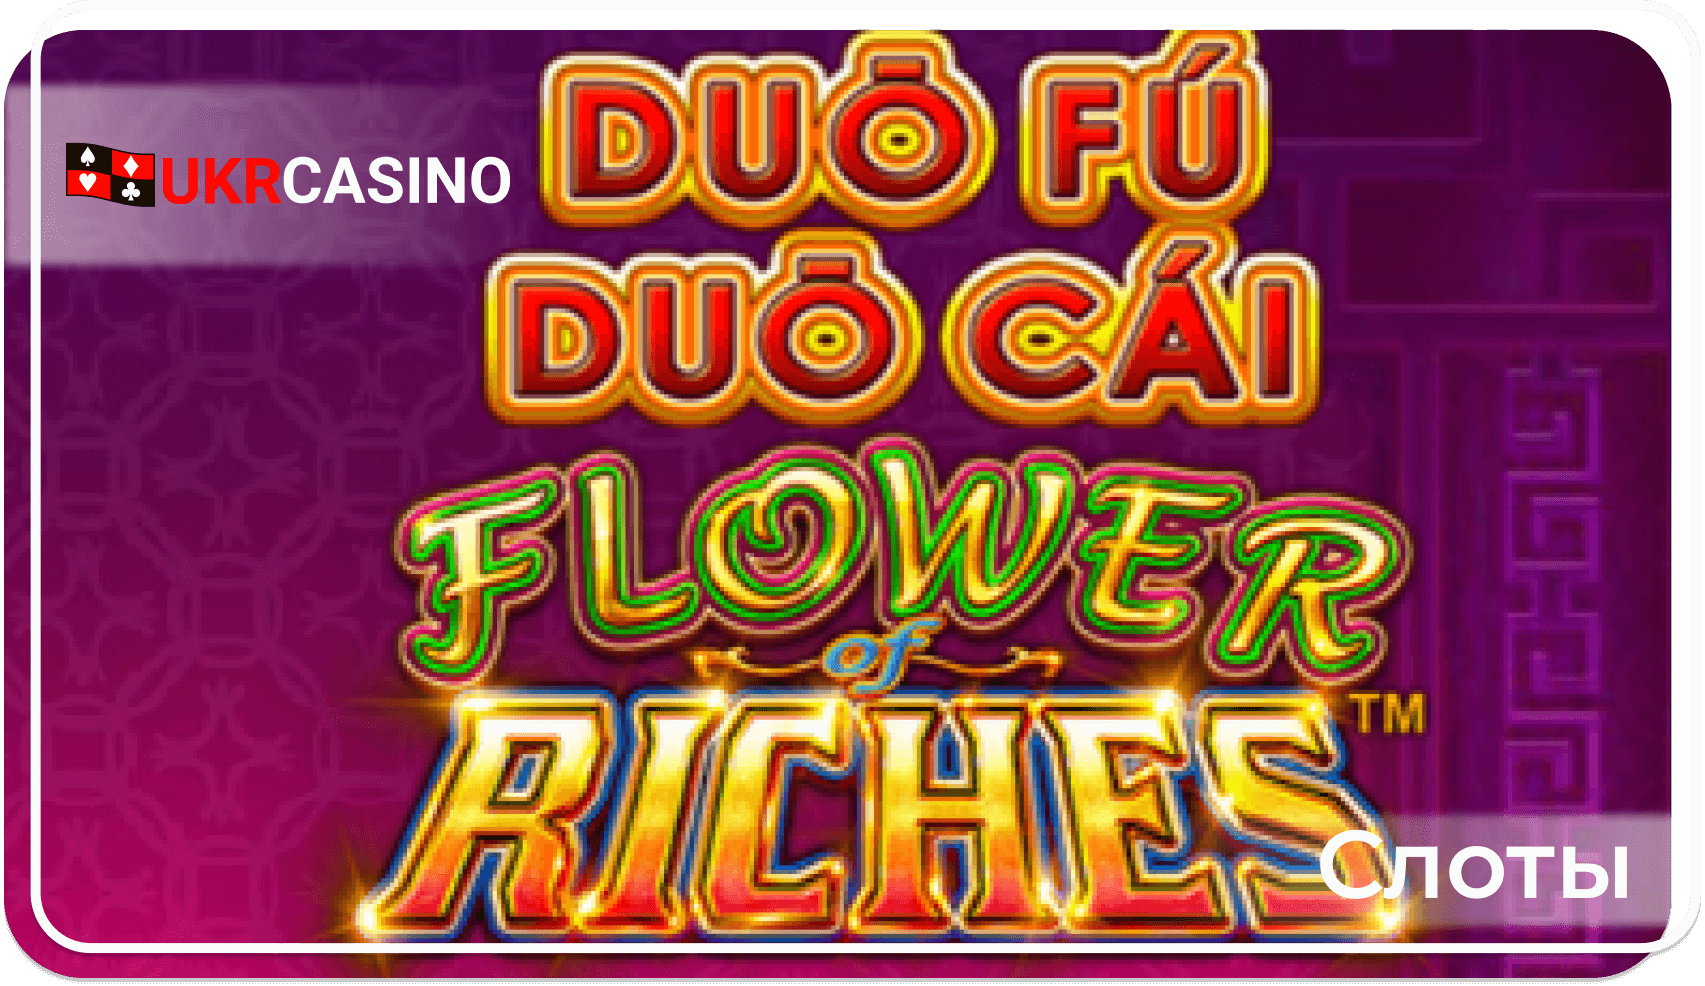 Duo Fu Duo Cai Flower Riches - Light & Wonder